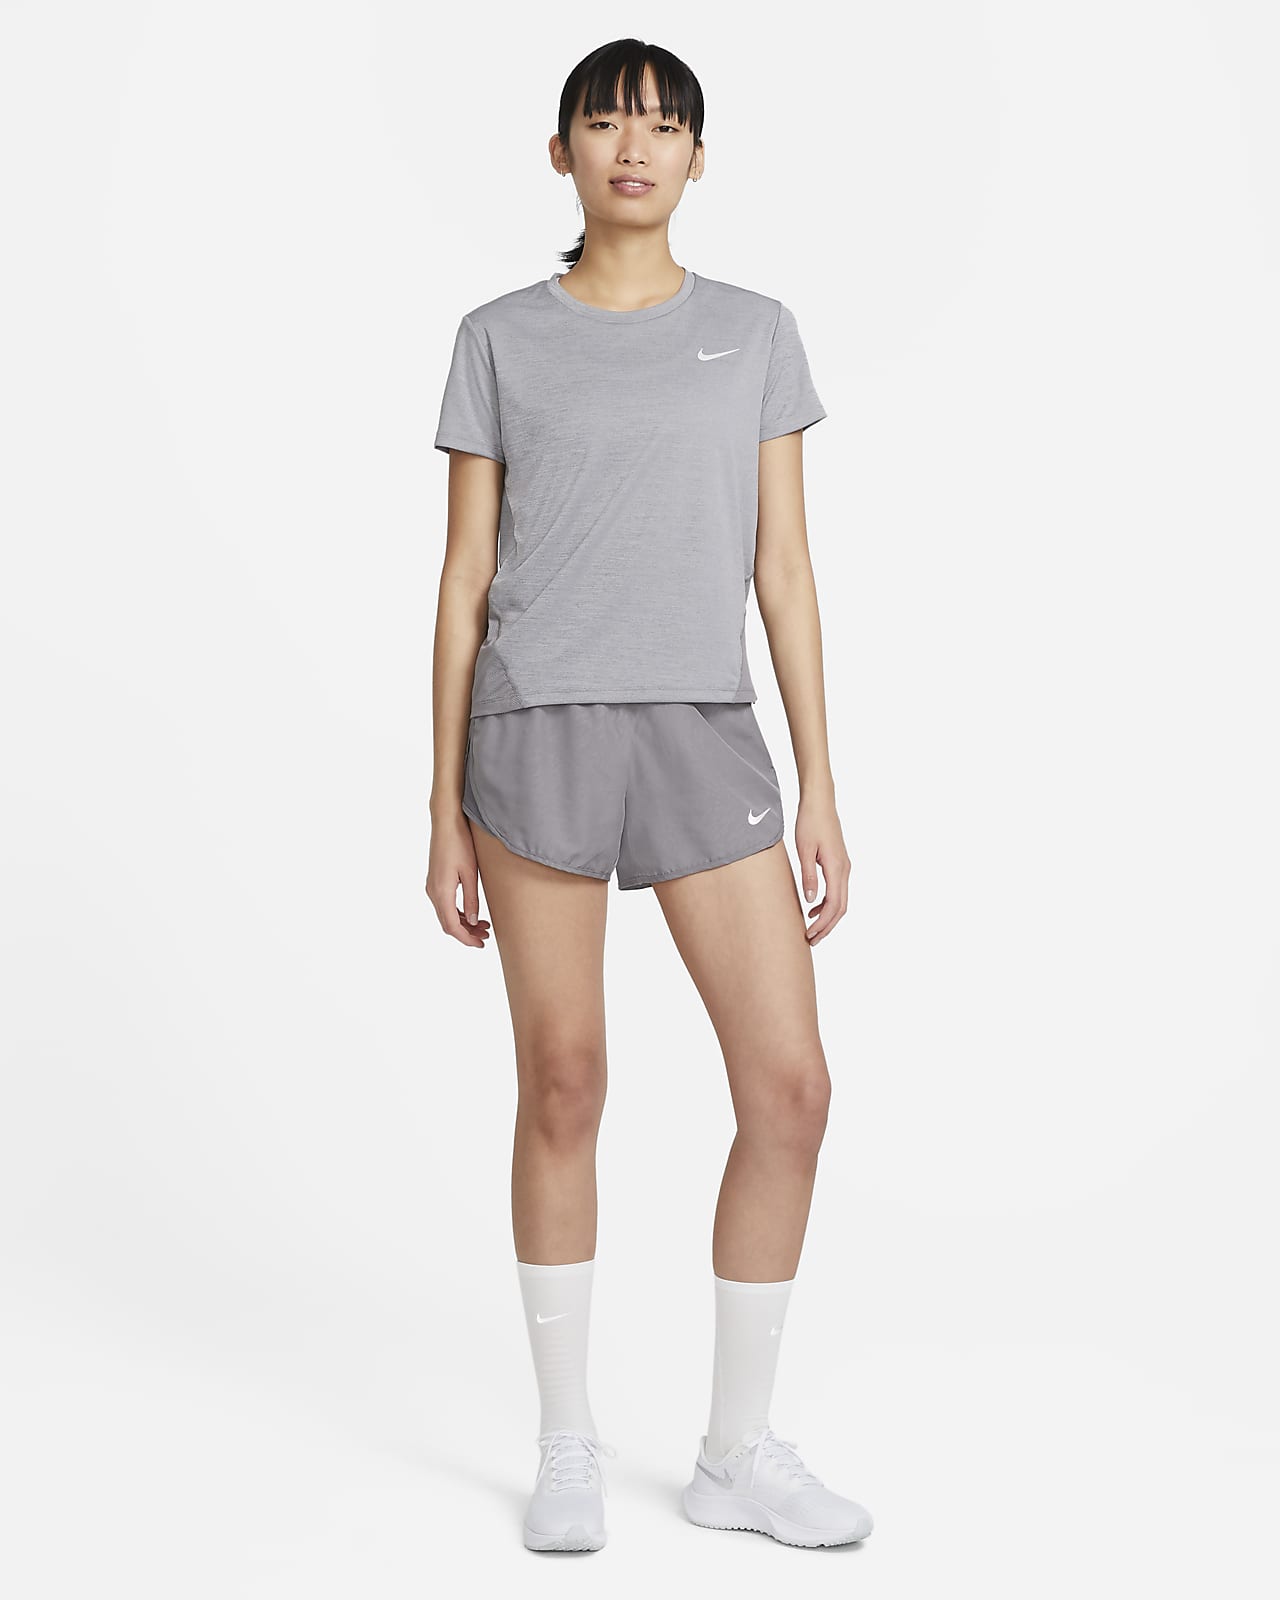 Running Women\'s Nike Top. Miler Short-Sleeve